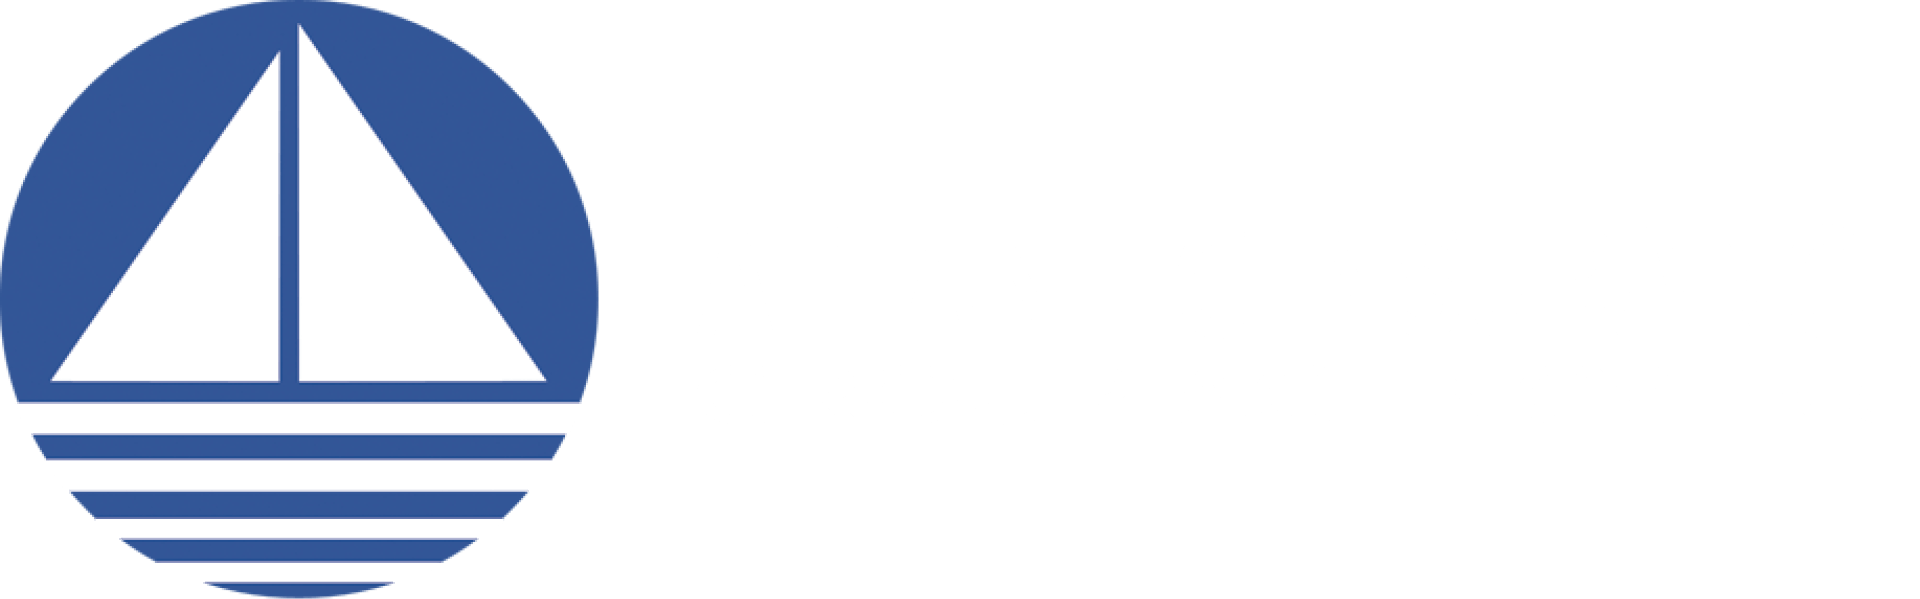 atlantic insurance logo